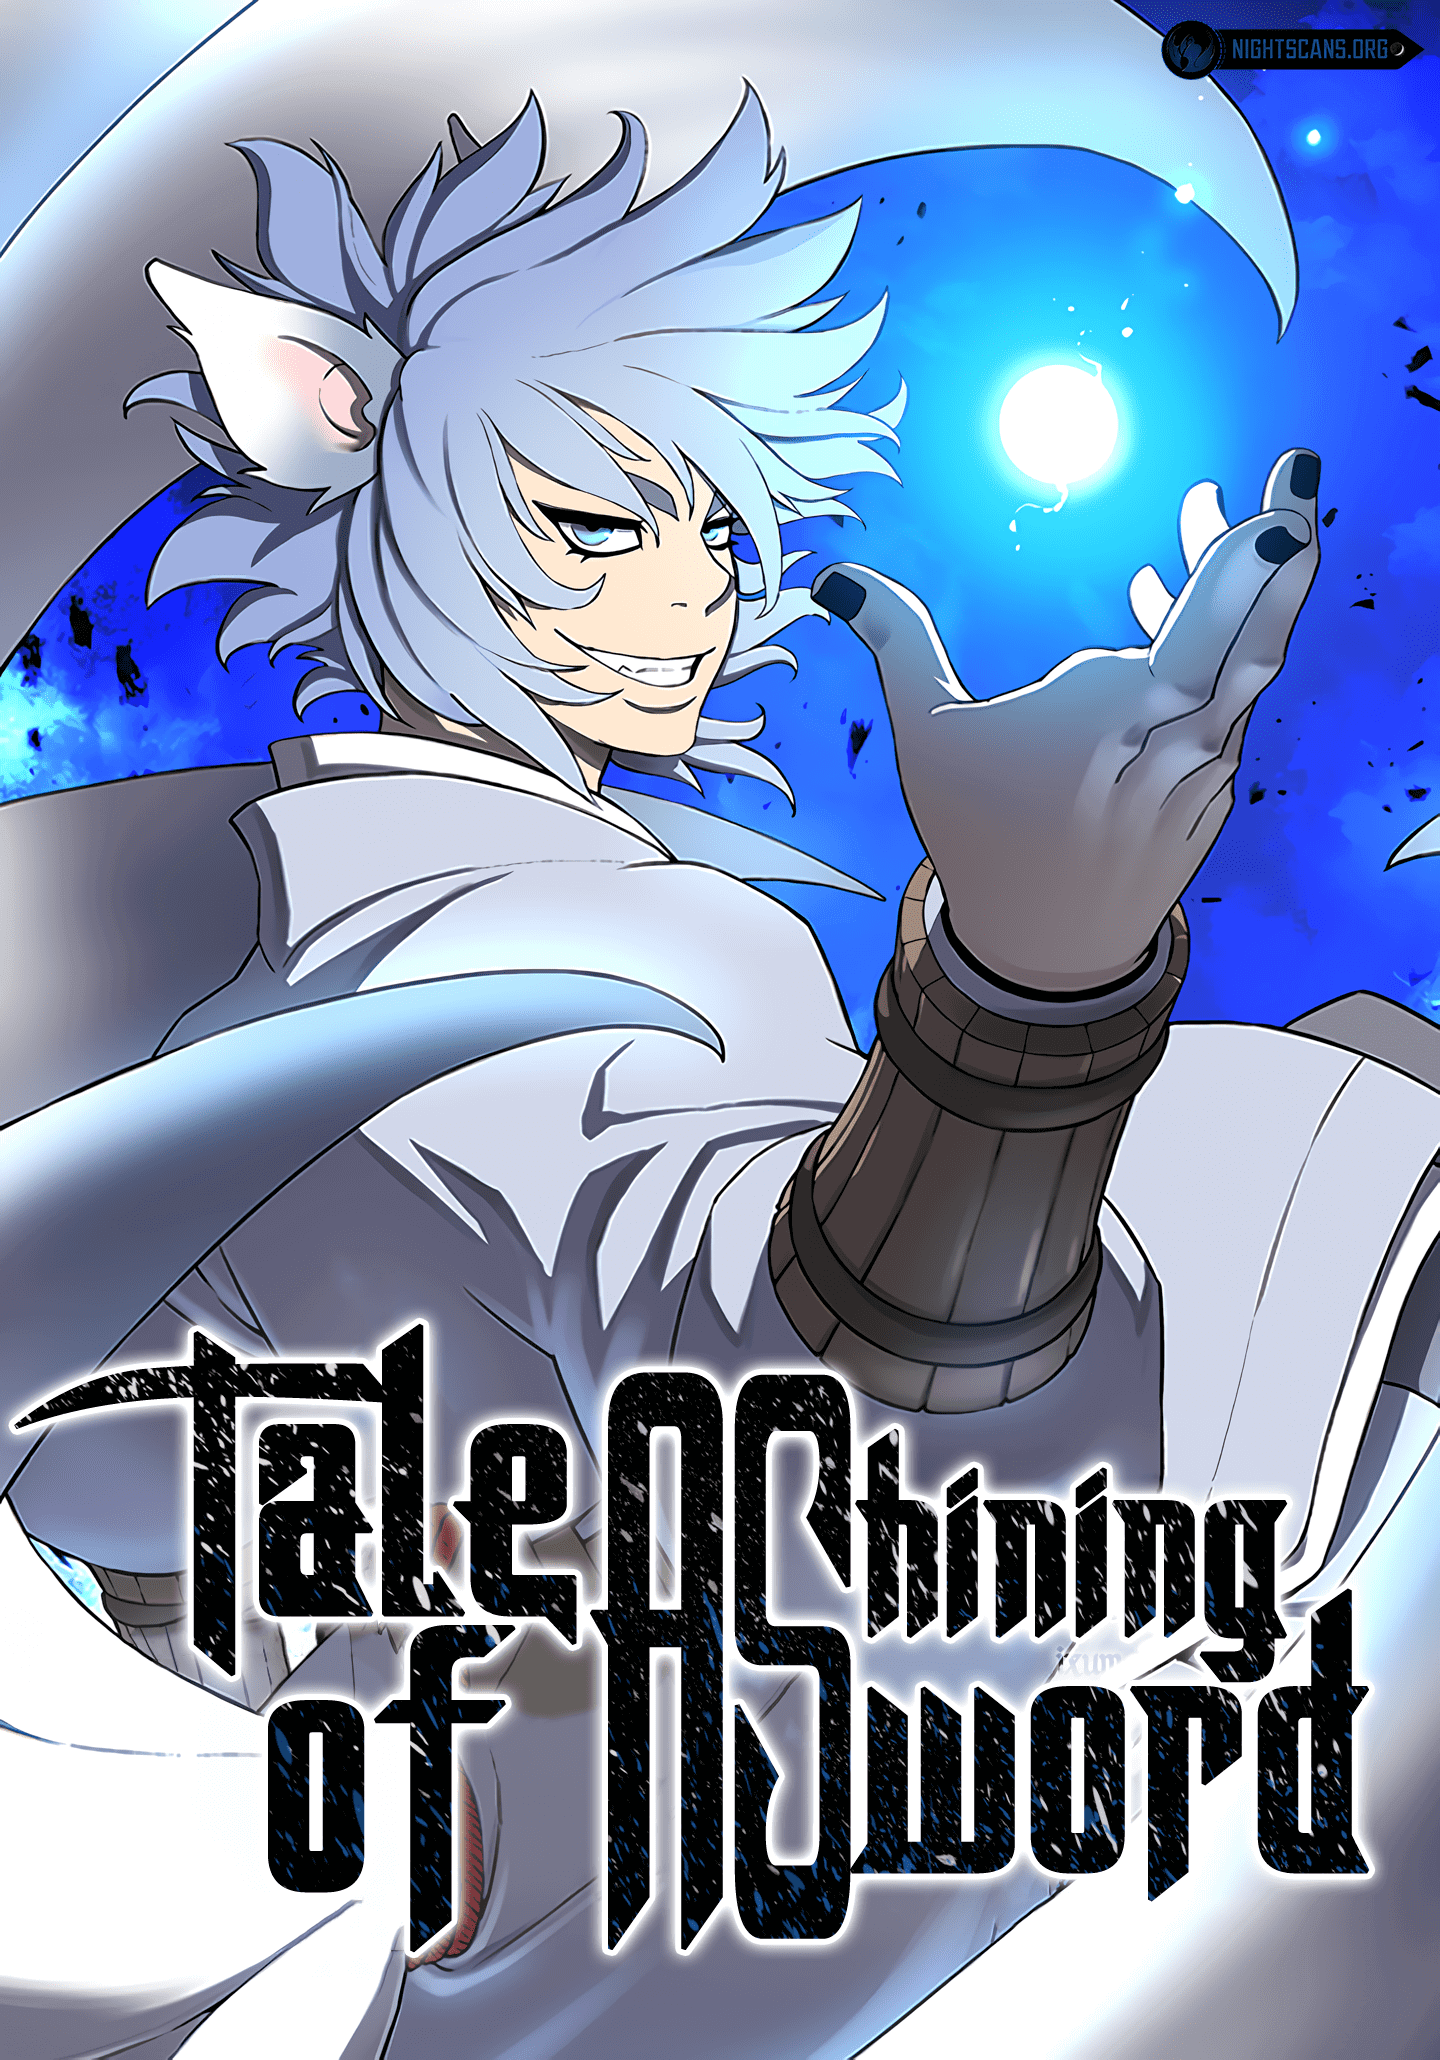 Tales of A Shining Sword